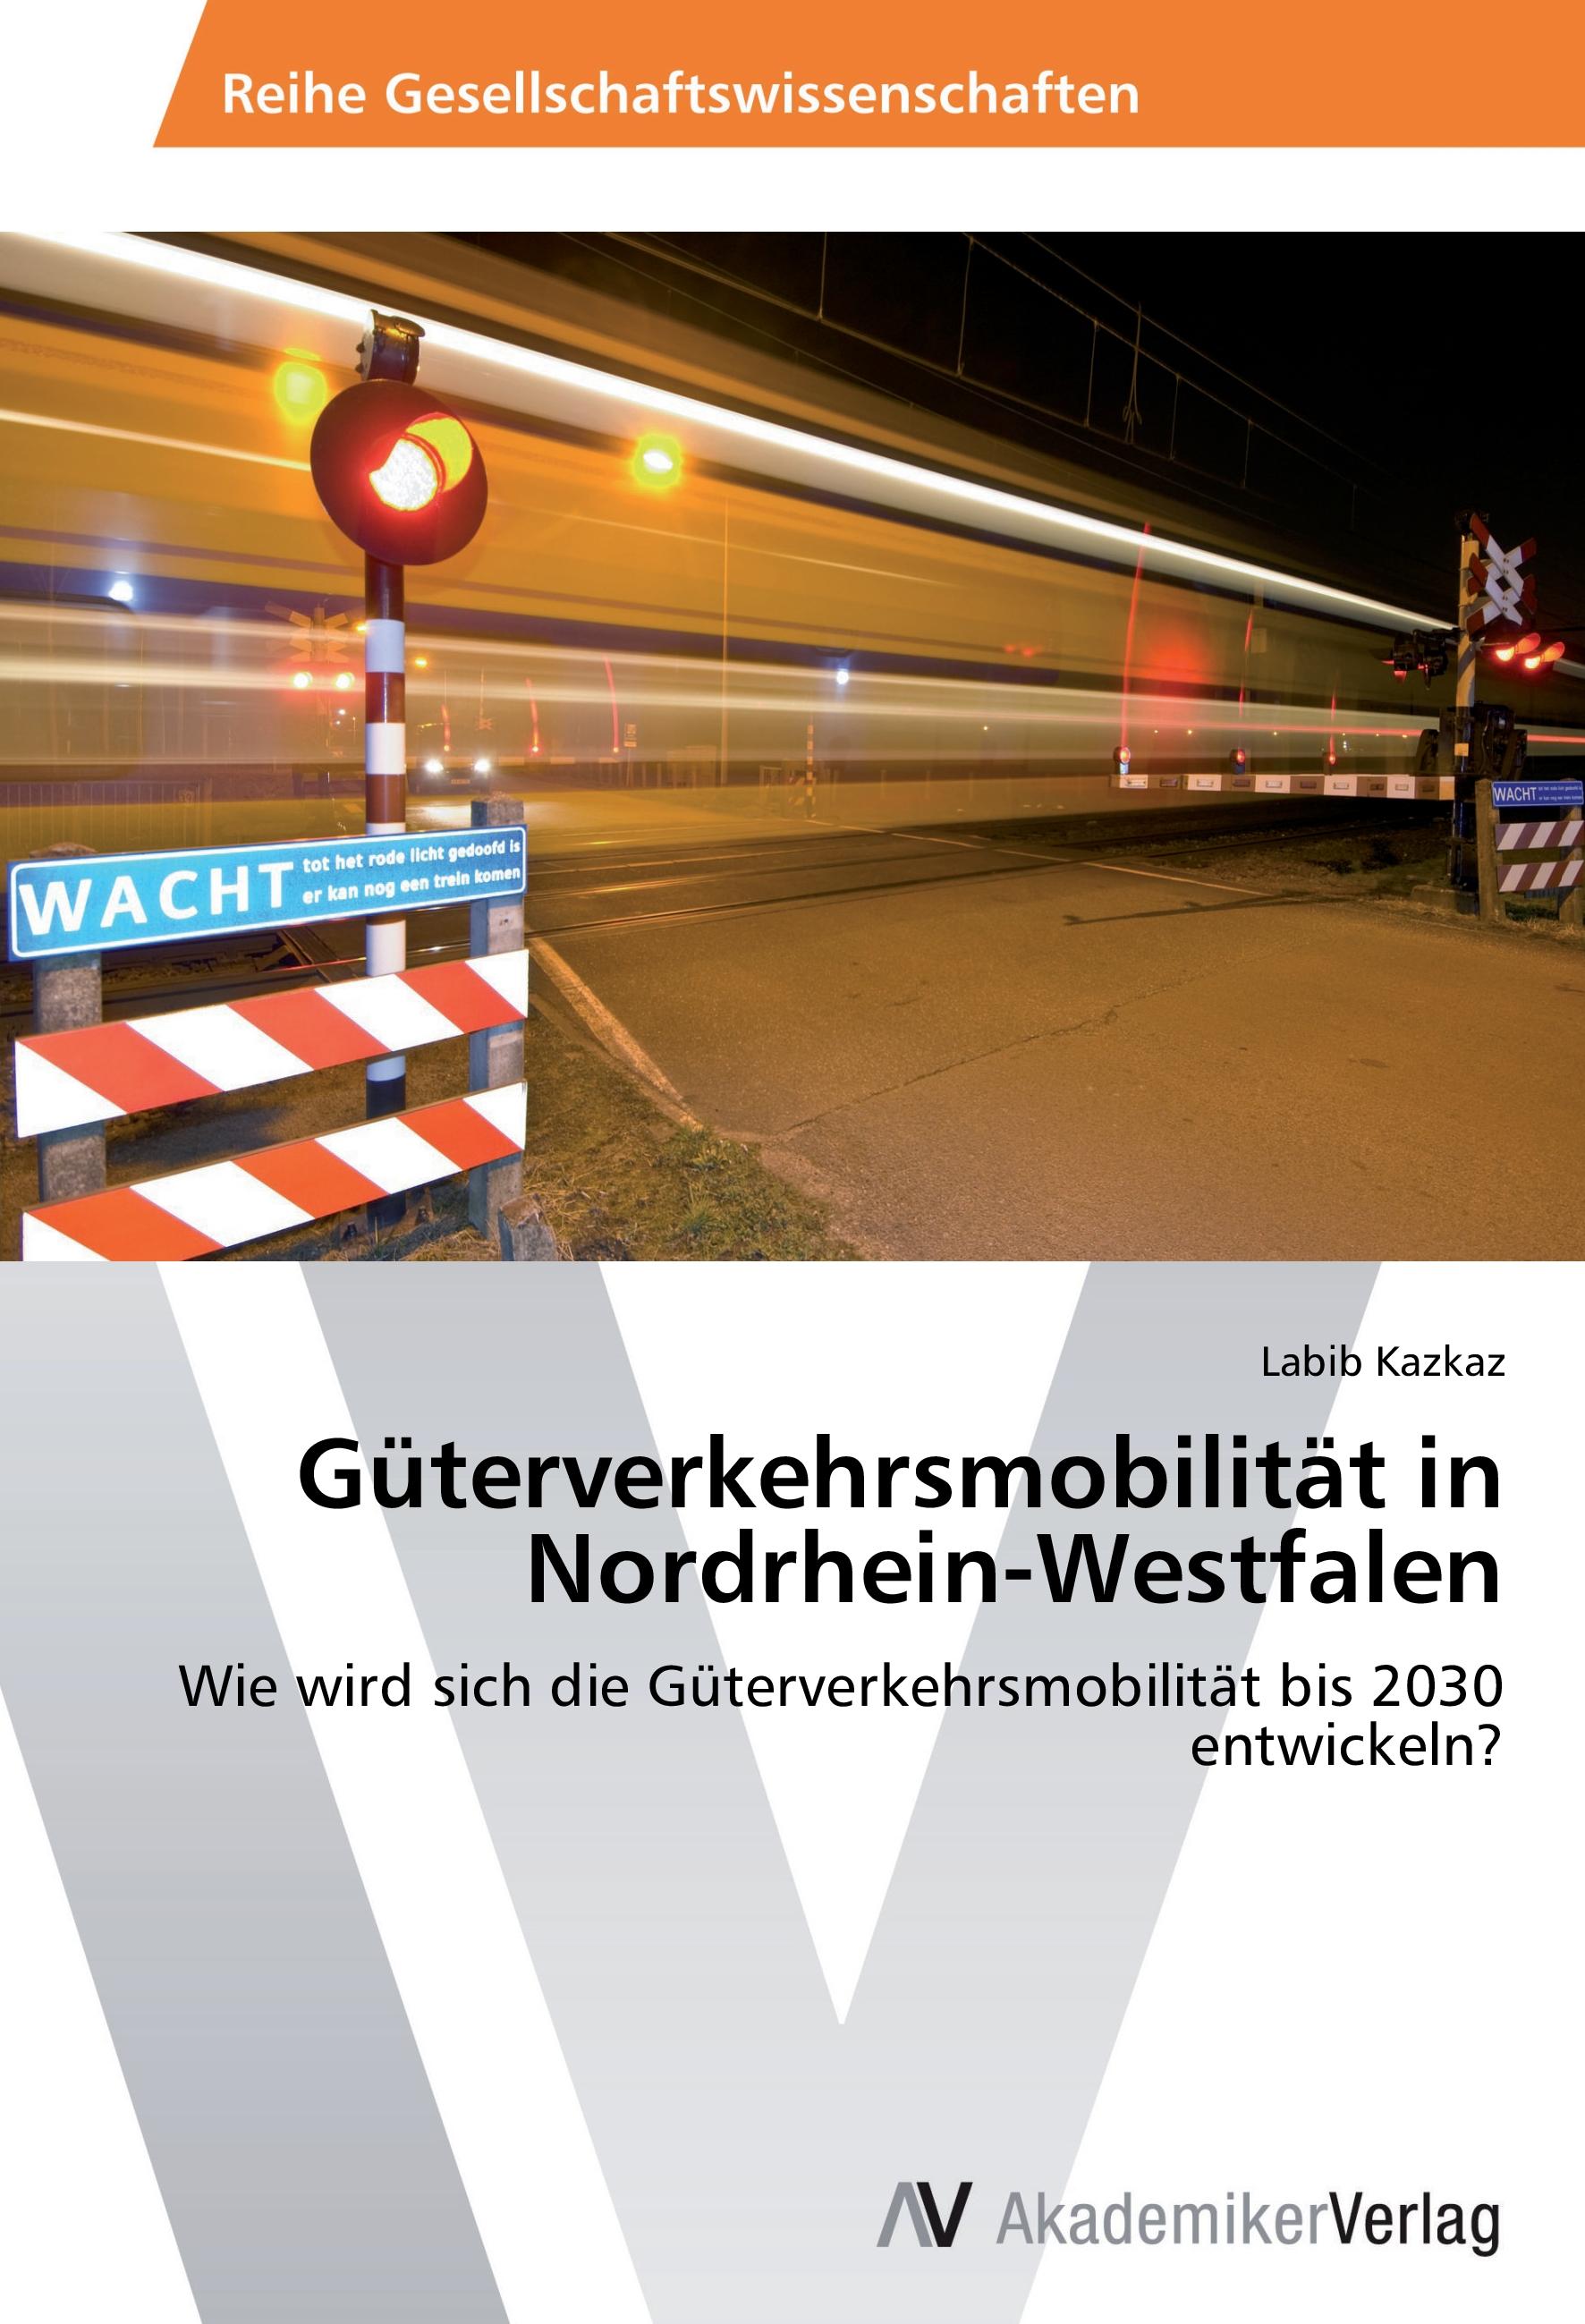 Gueterverkehrsmobilitaet in Nordrhein-Westfalen - Labib Kazkaz